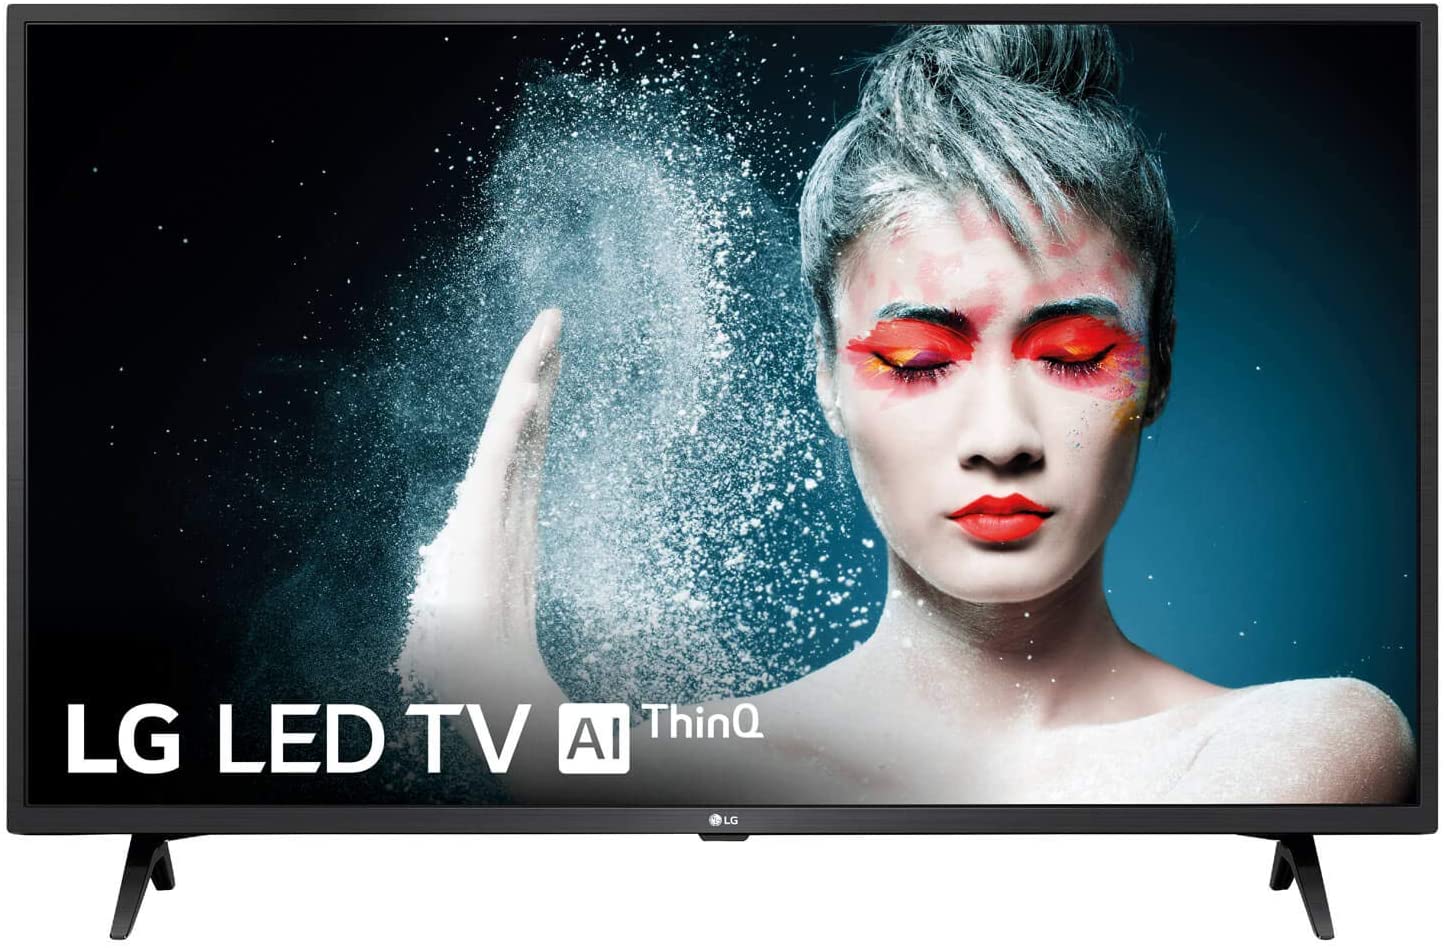 LG 43 Inch TV, Smart Full HD LED TV, HDR, 43LM6300PVB